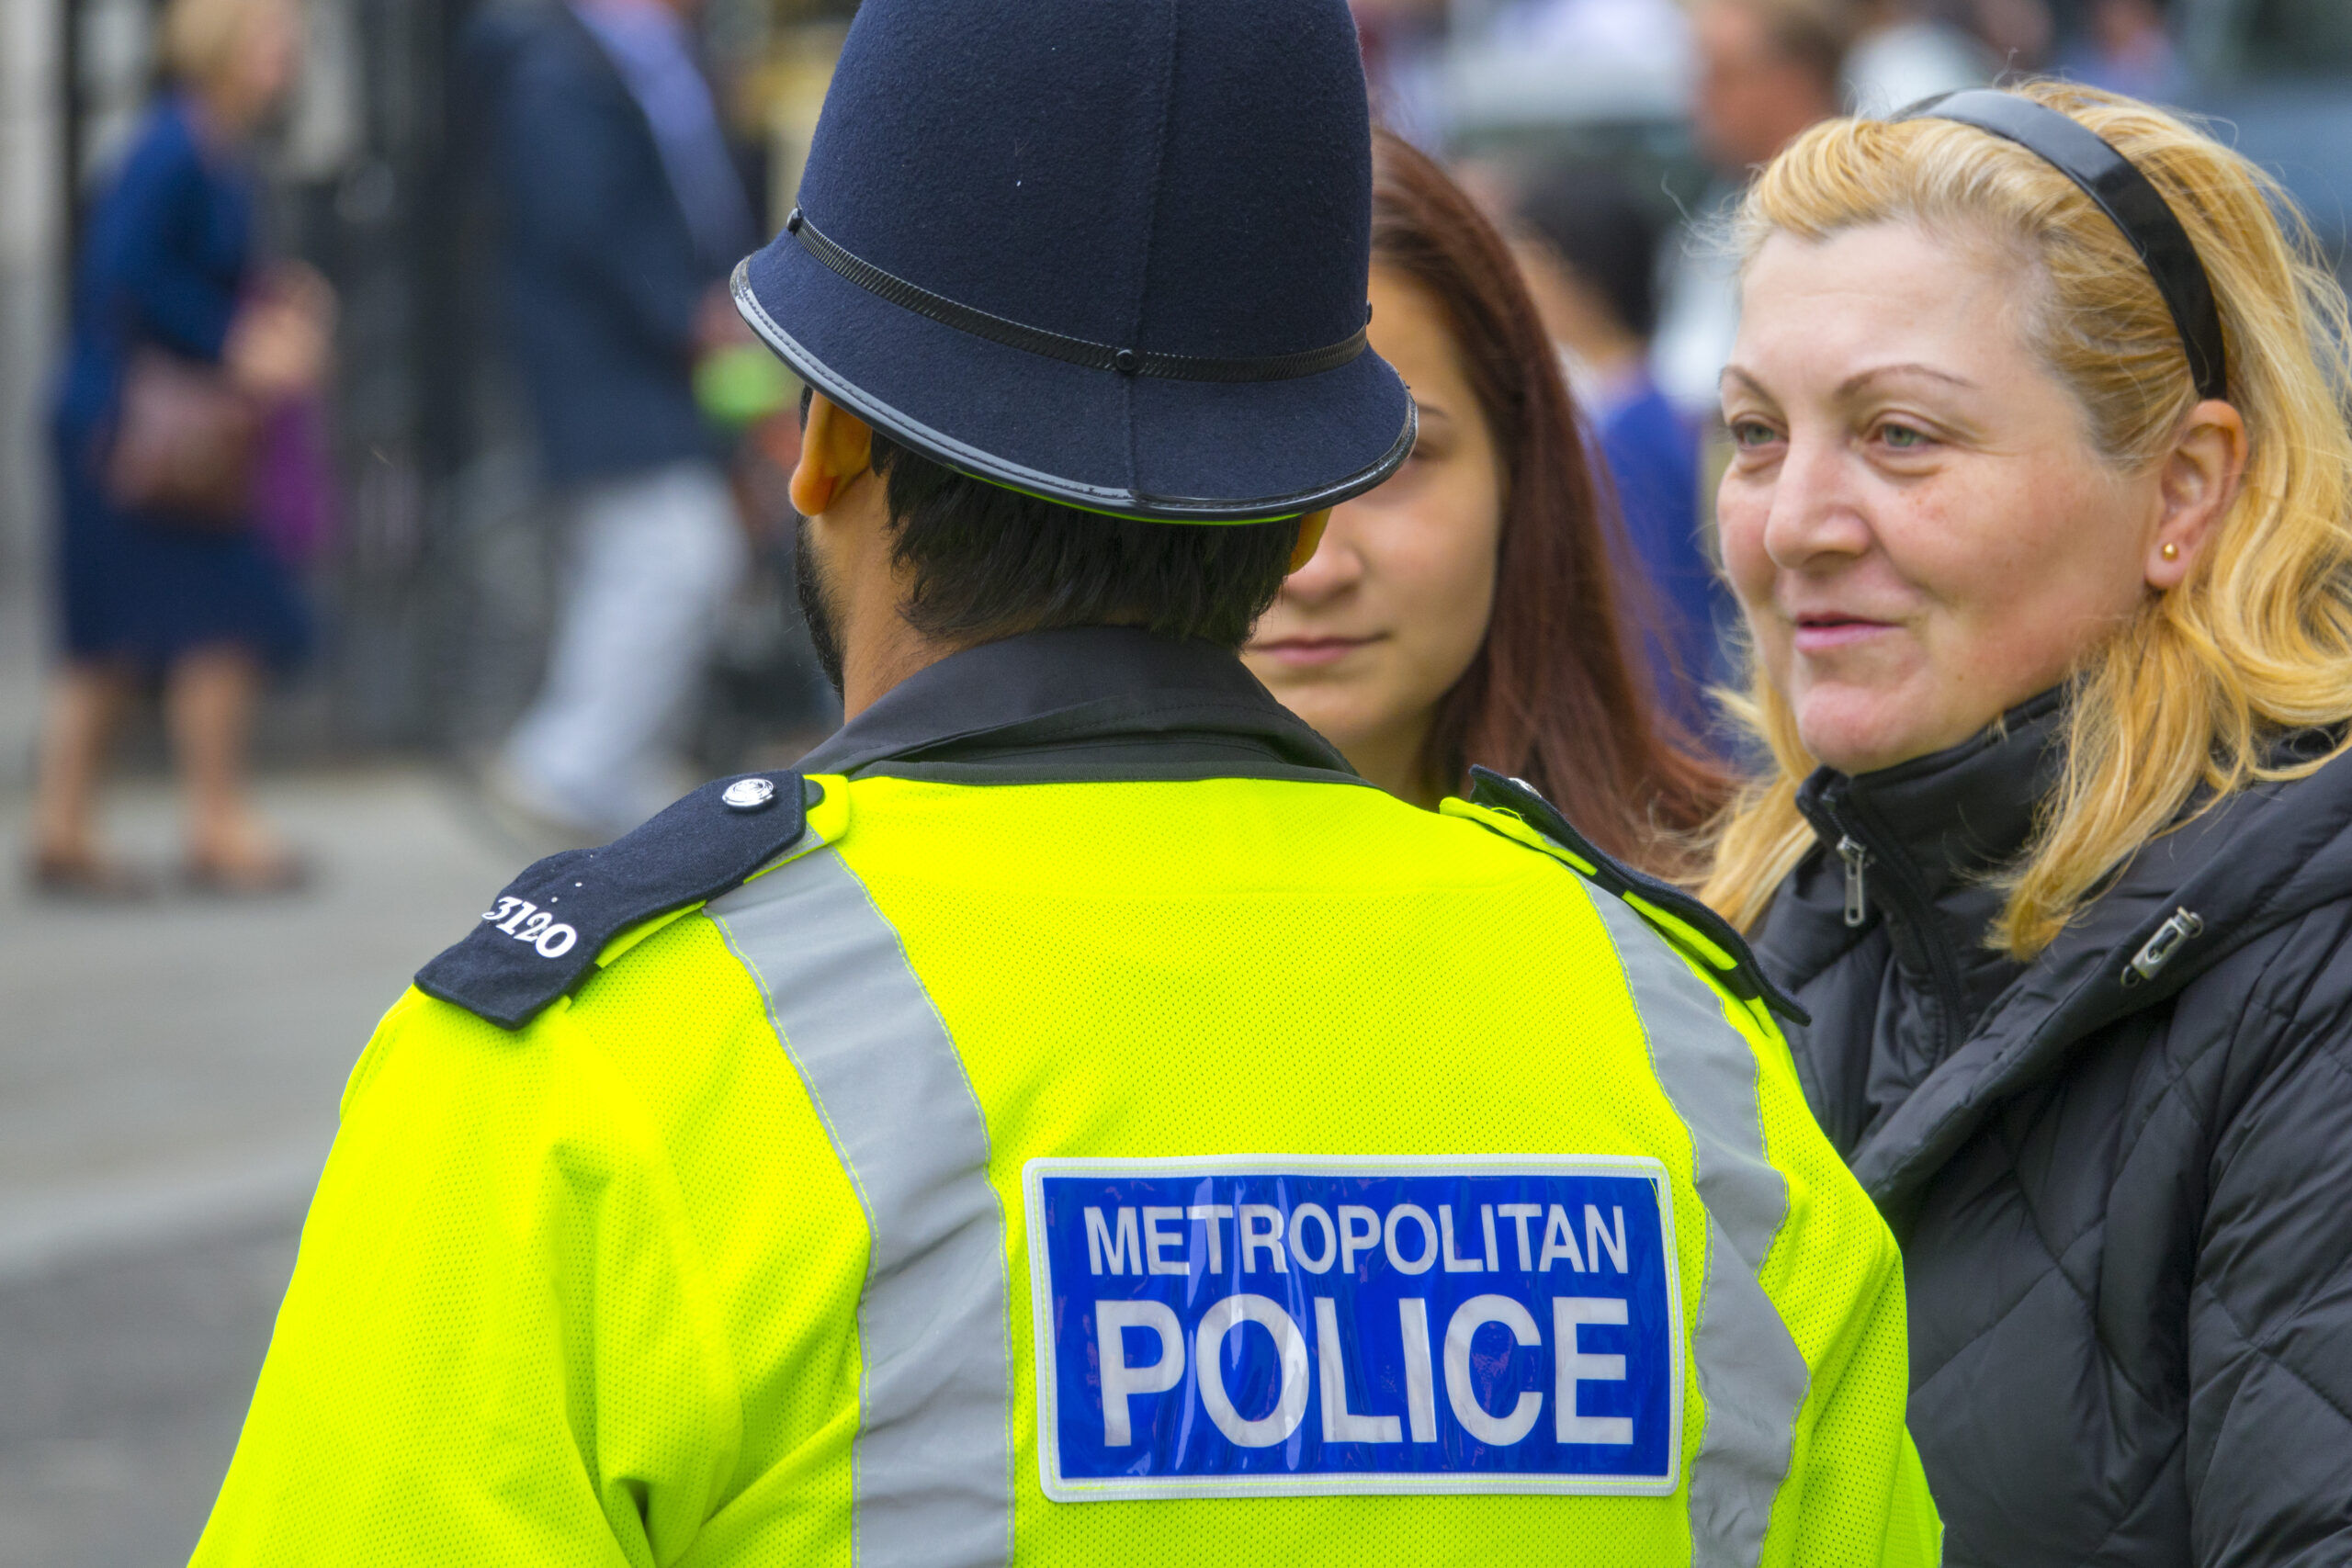 LONDON / ENGLAND - SEPTEMBER 23, 2016: A London Metropolitan Police officer talks to two women on the street